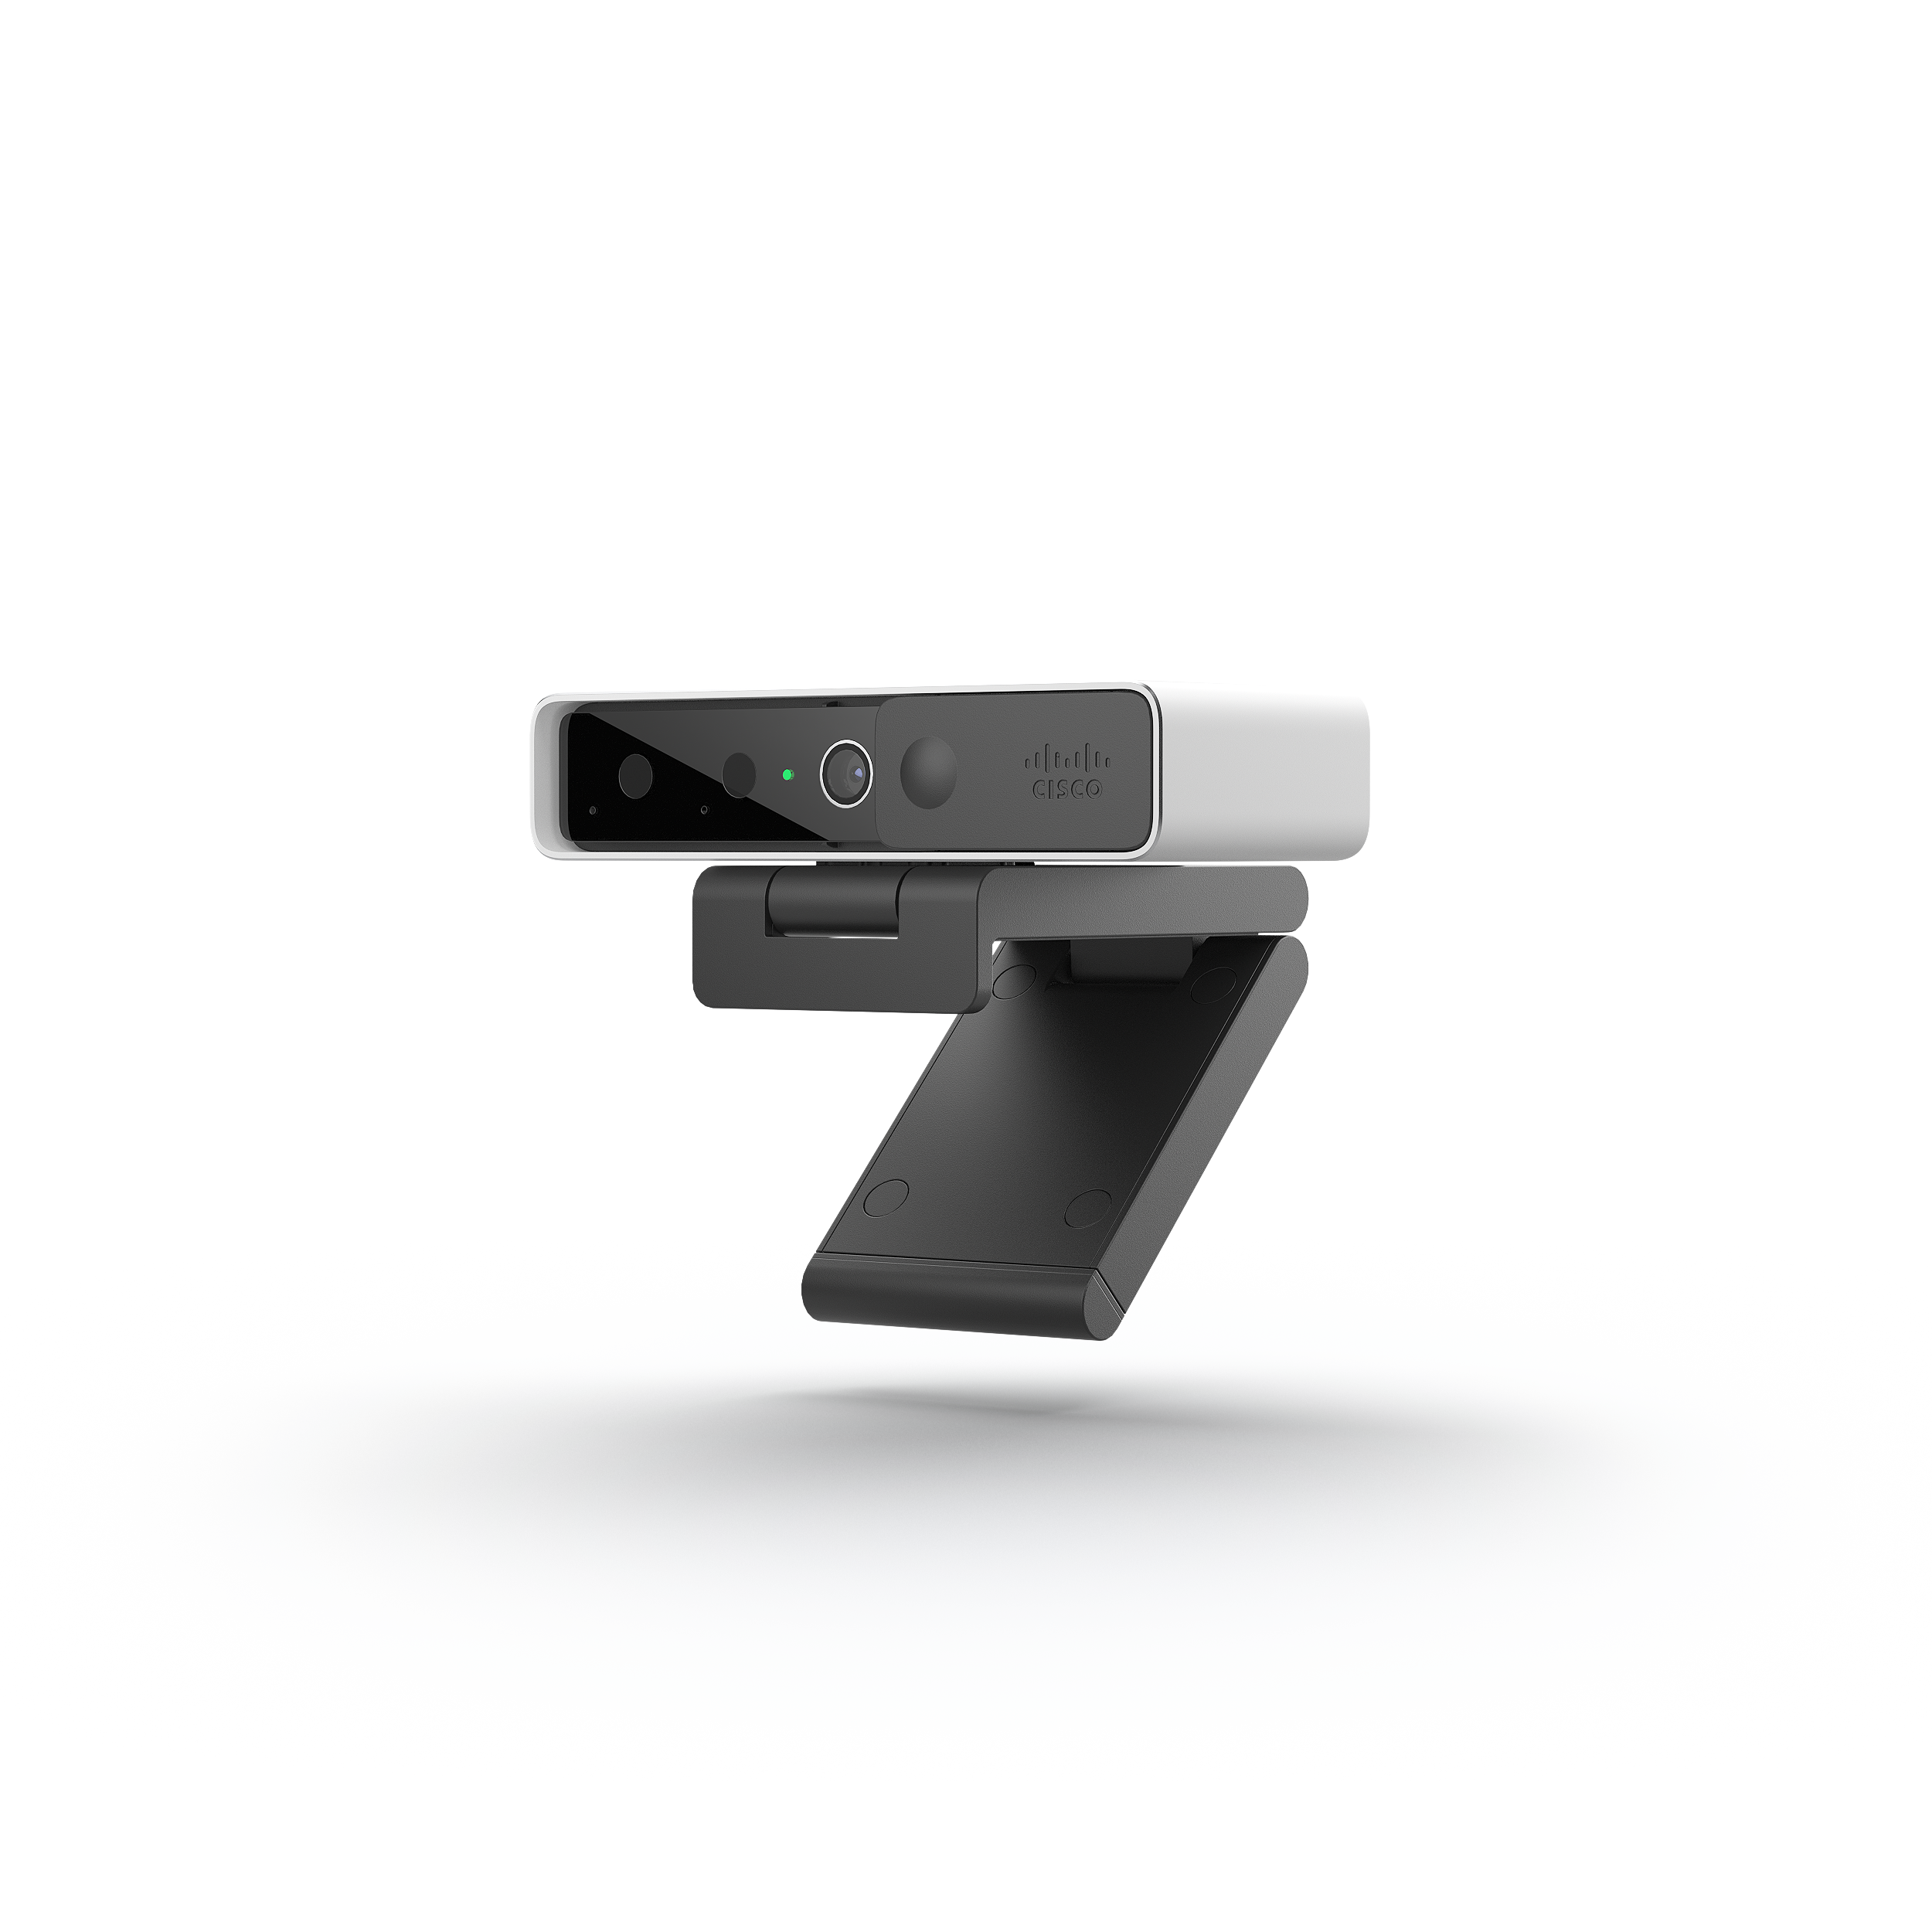  Image of the Cisco Desk Camera